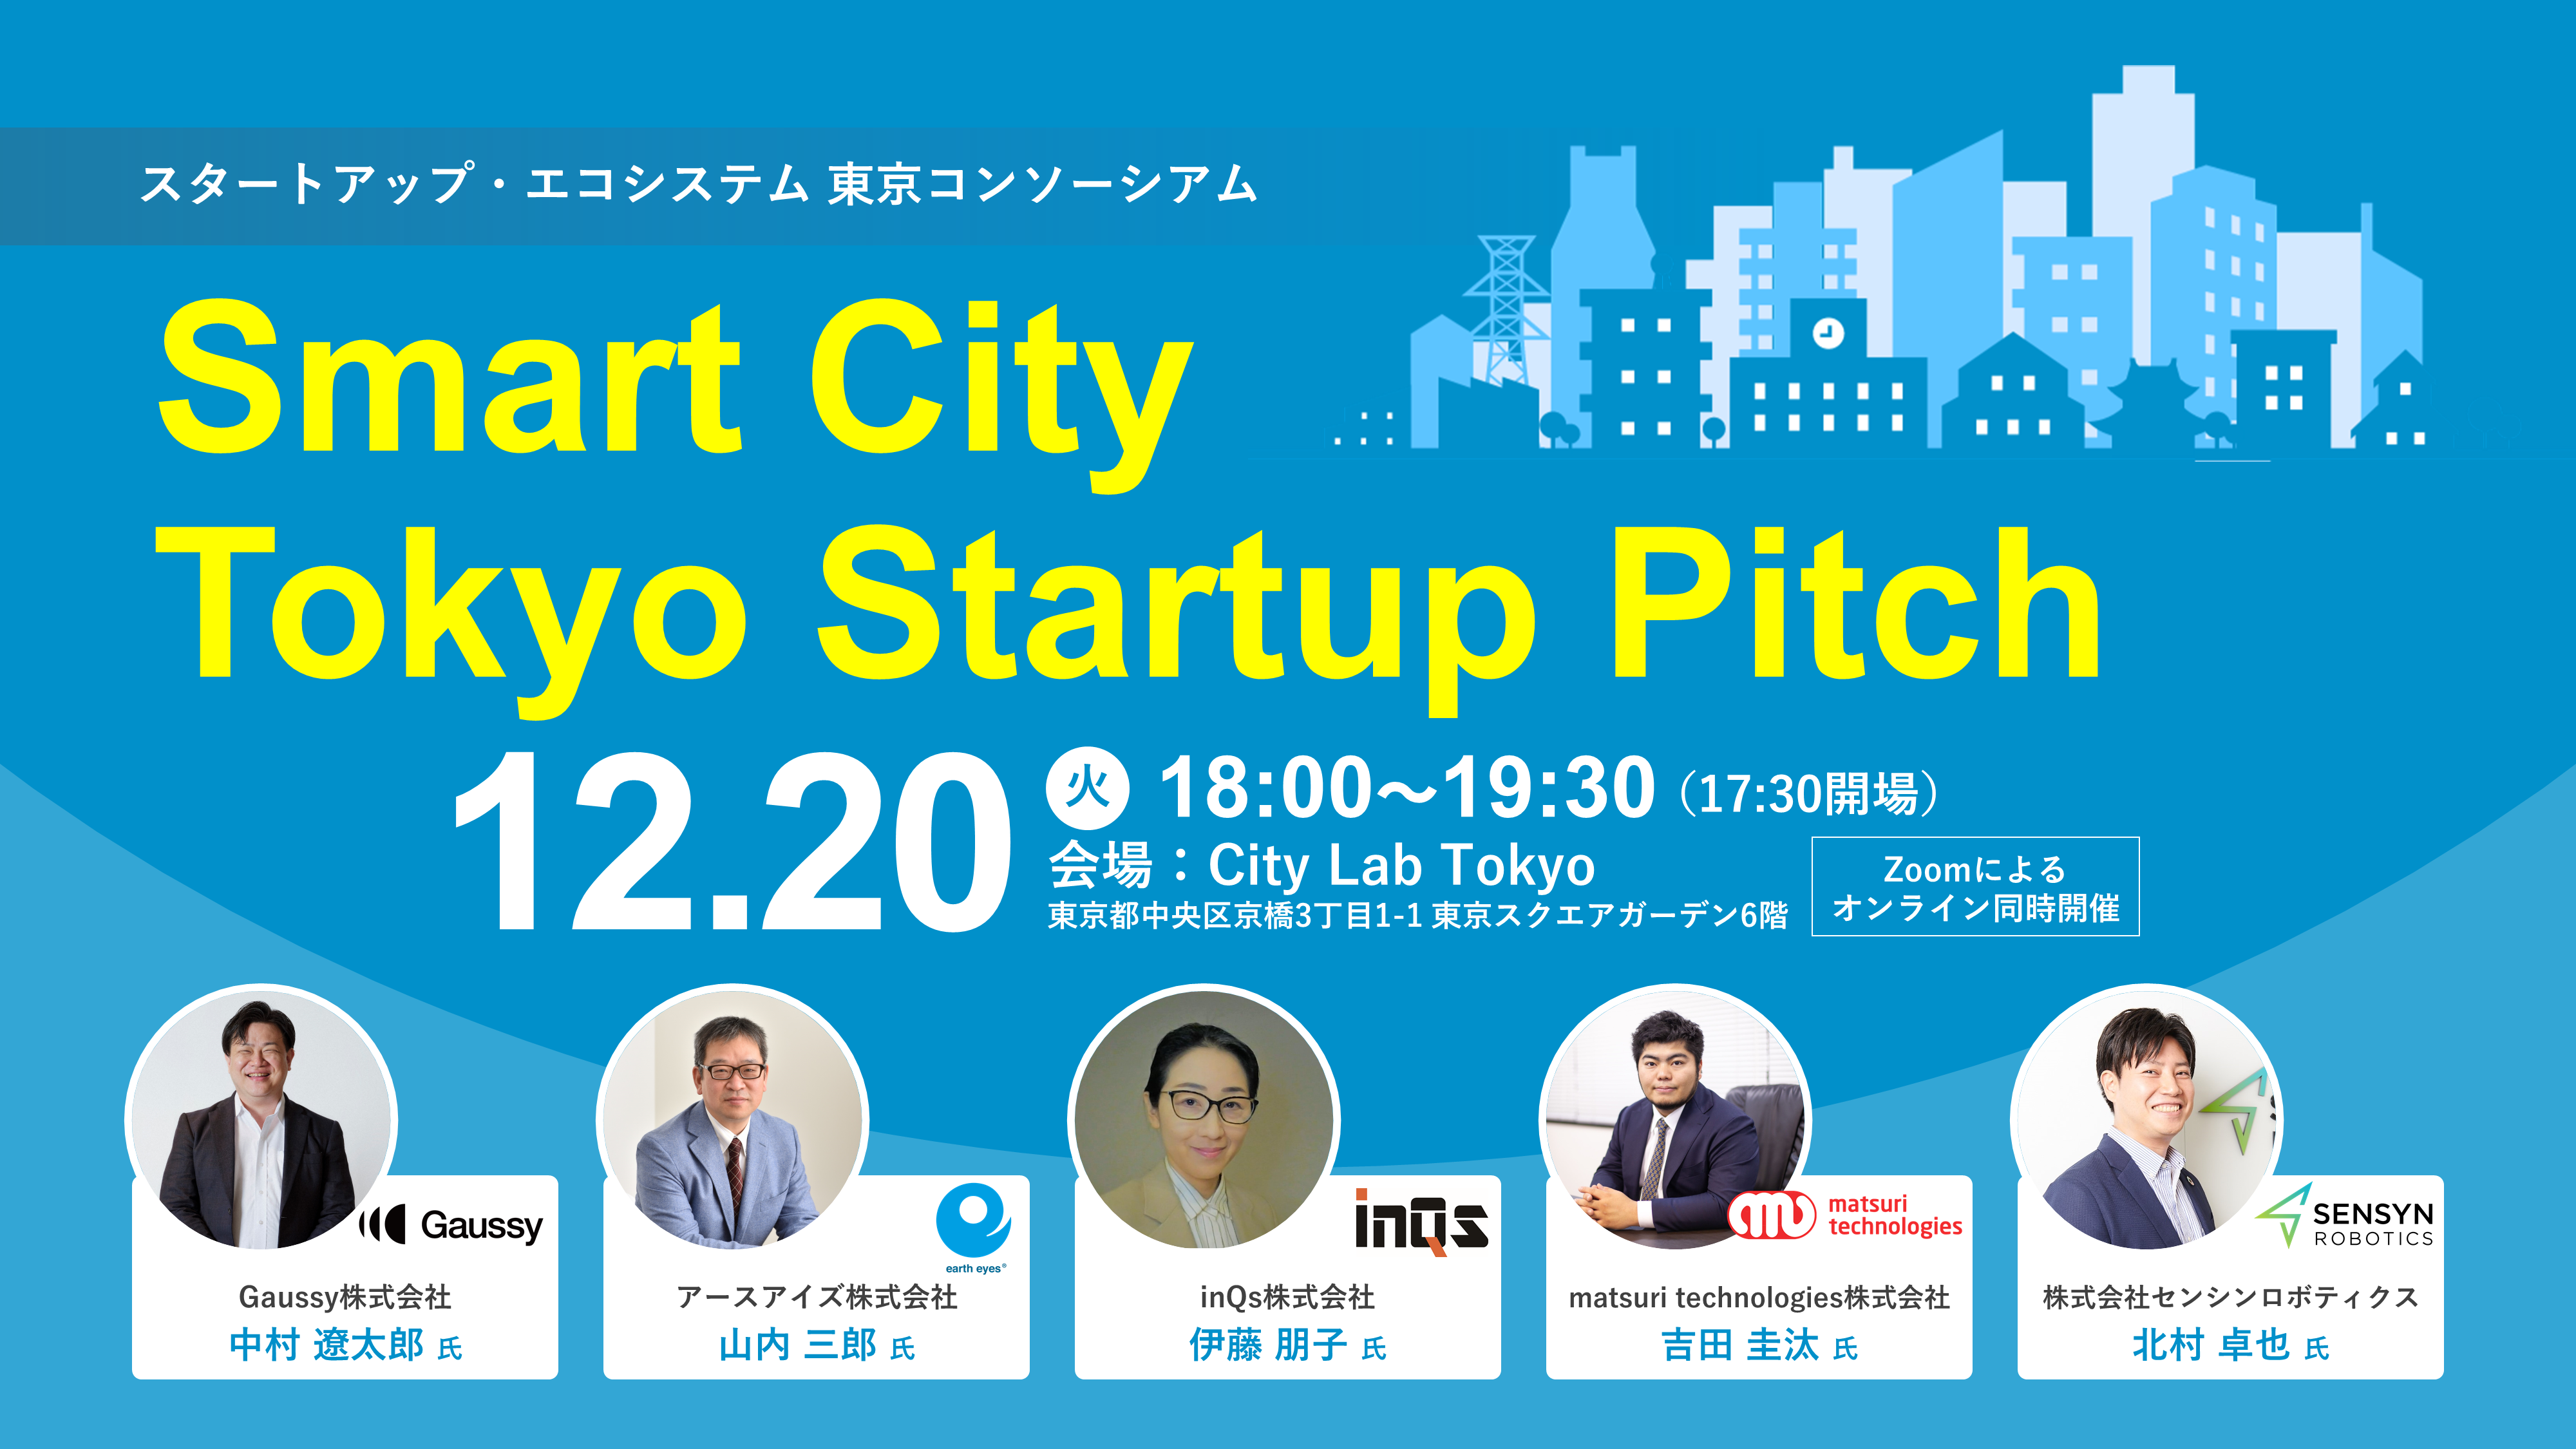 Smart City Tokyo Startup Pitch